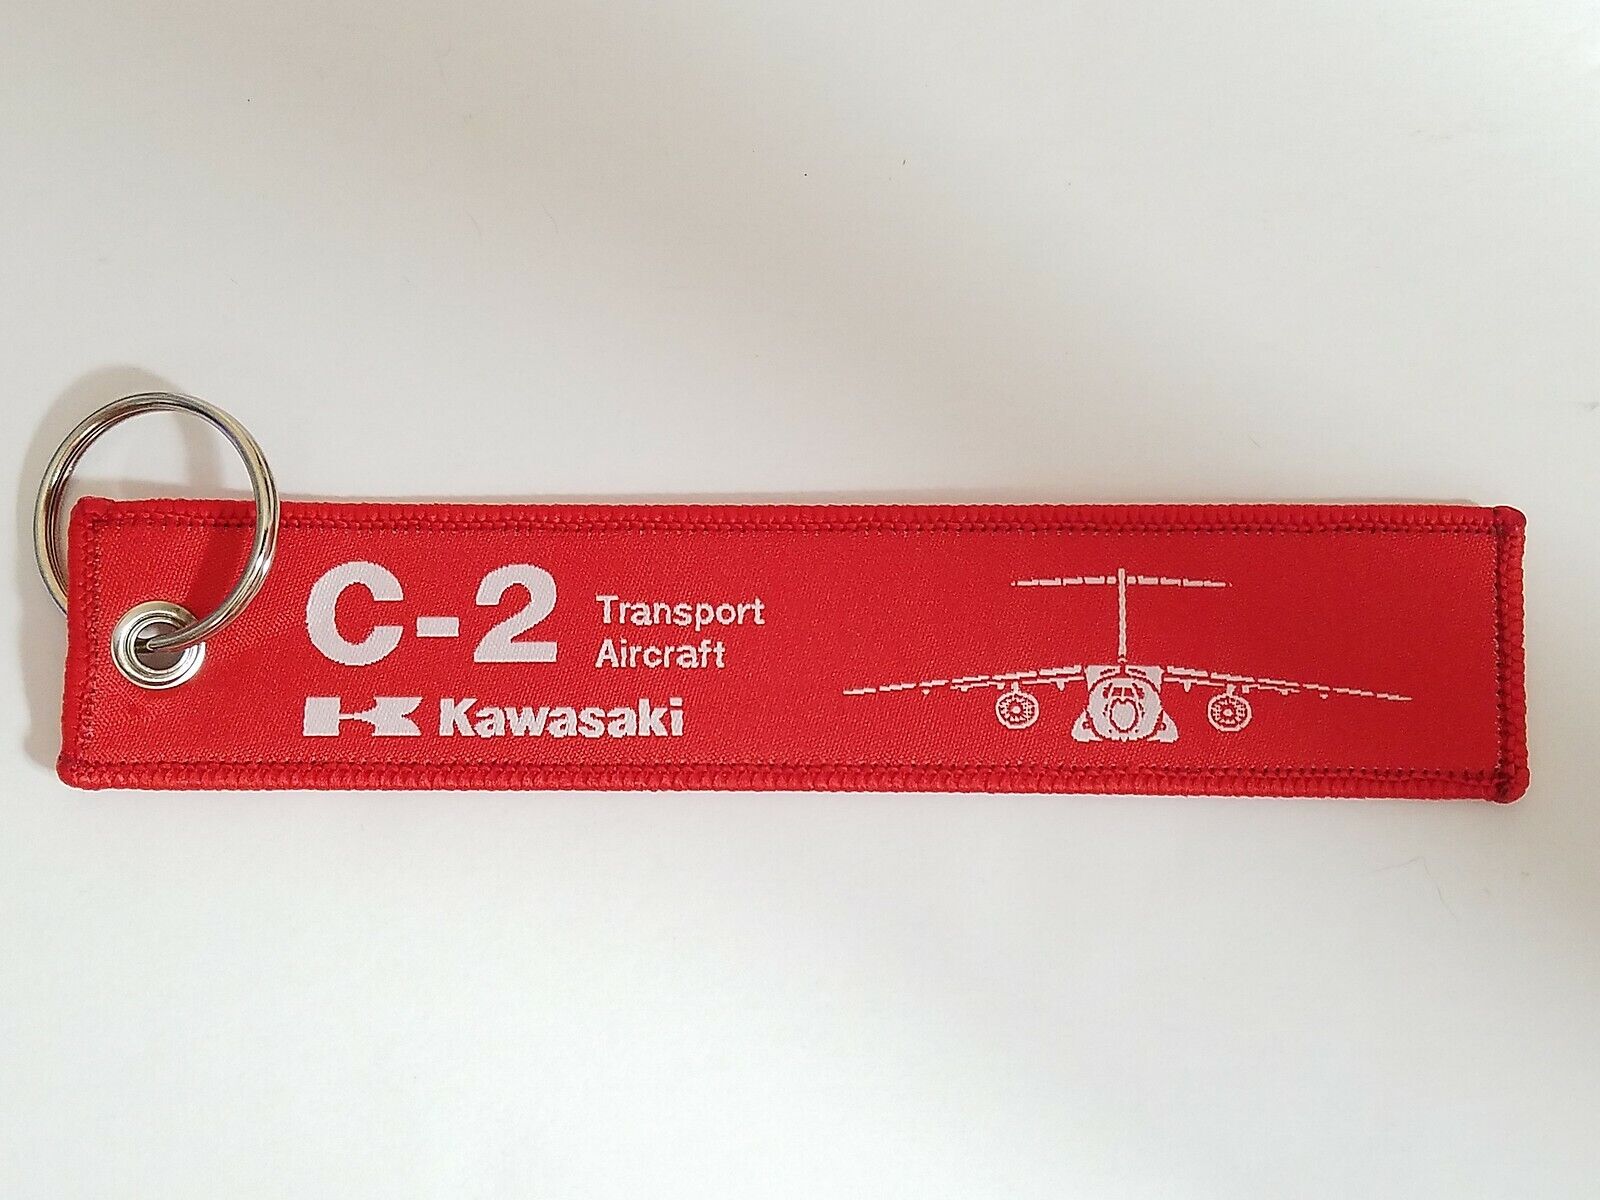 Kawasaki C-2 Transport Aircraft / Red Keychain Military